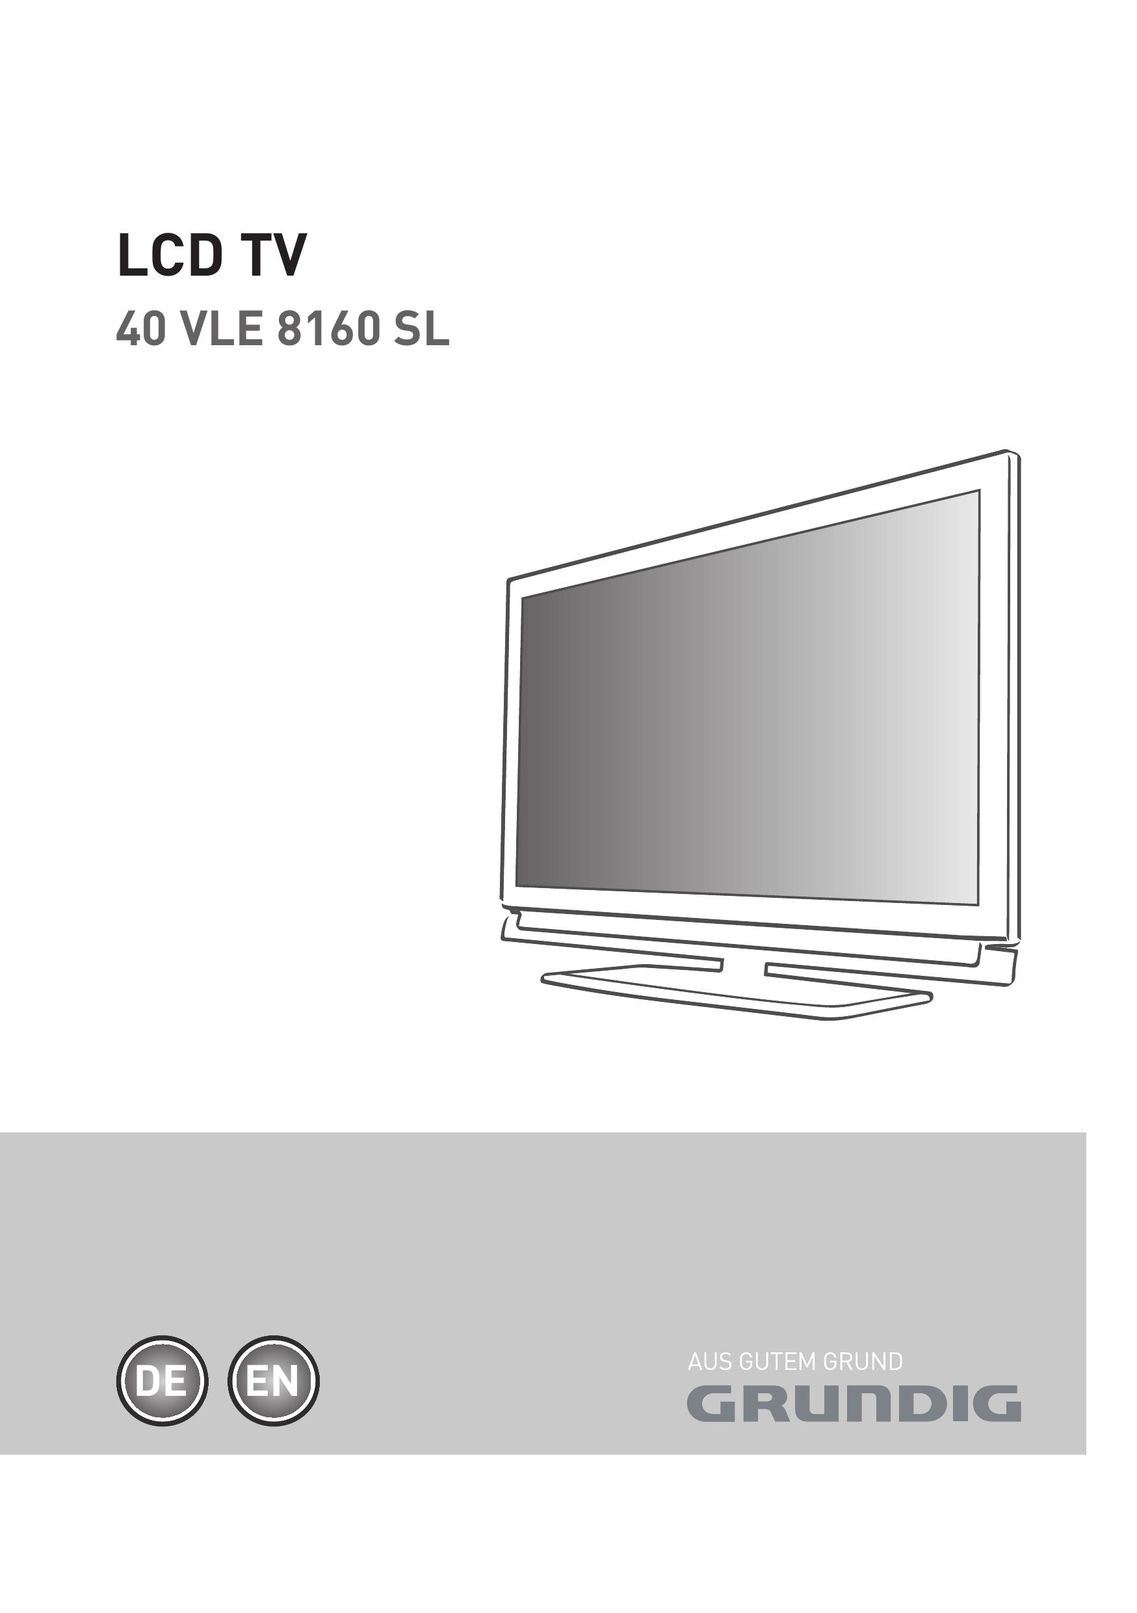 Grundig 40 VLE 8160 SL Flat Panel Television User Manual